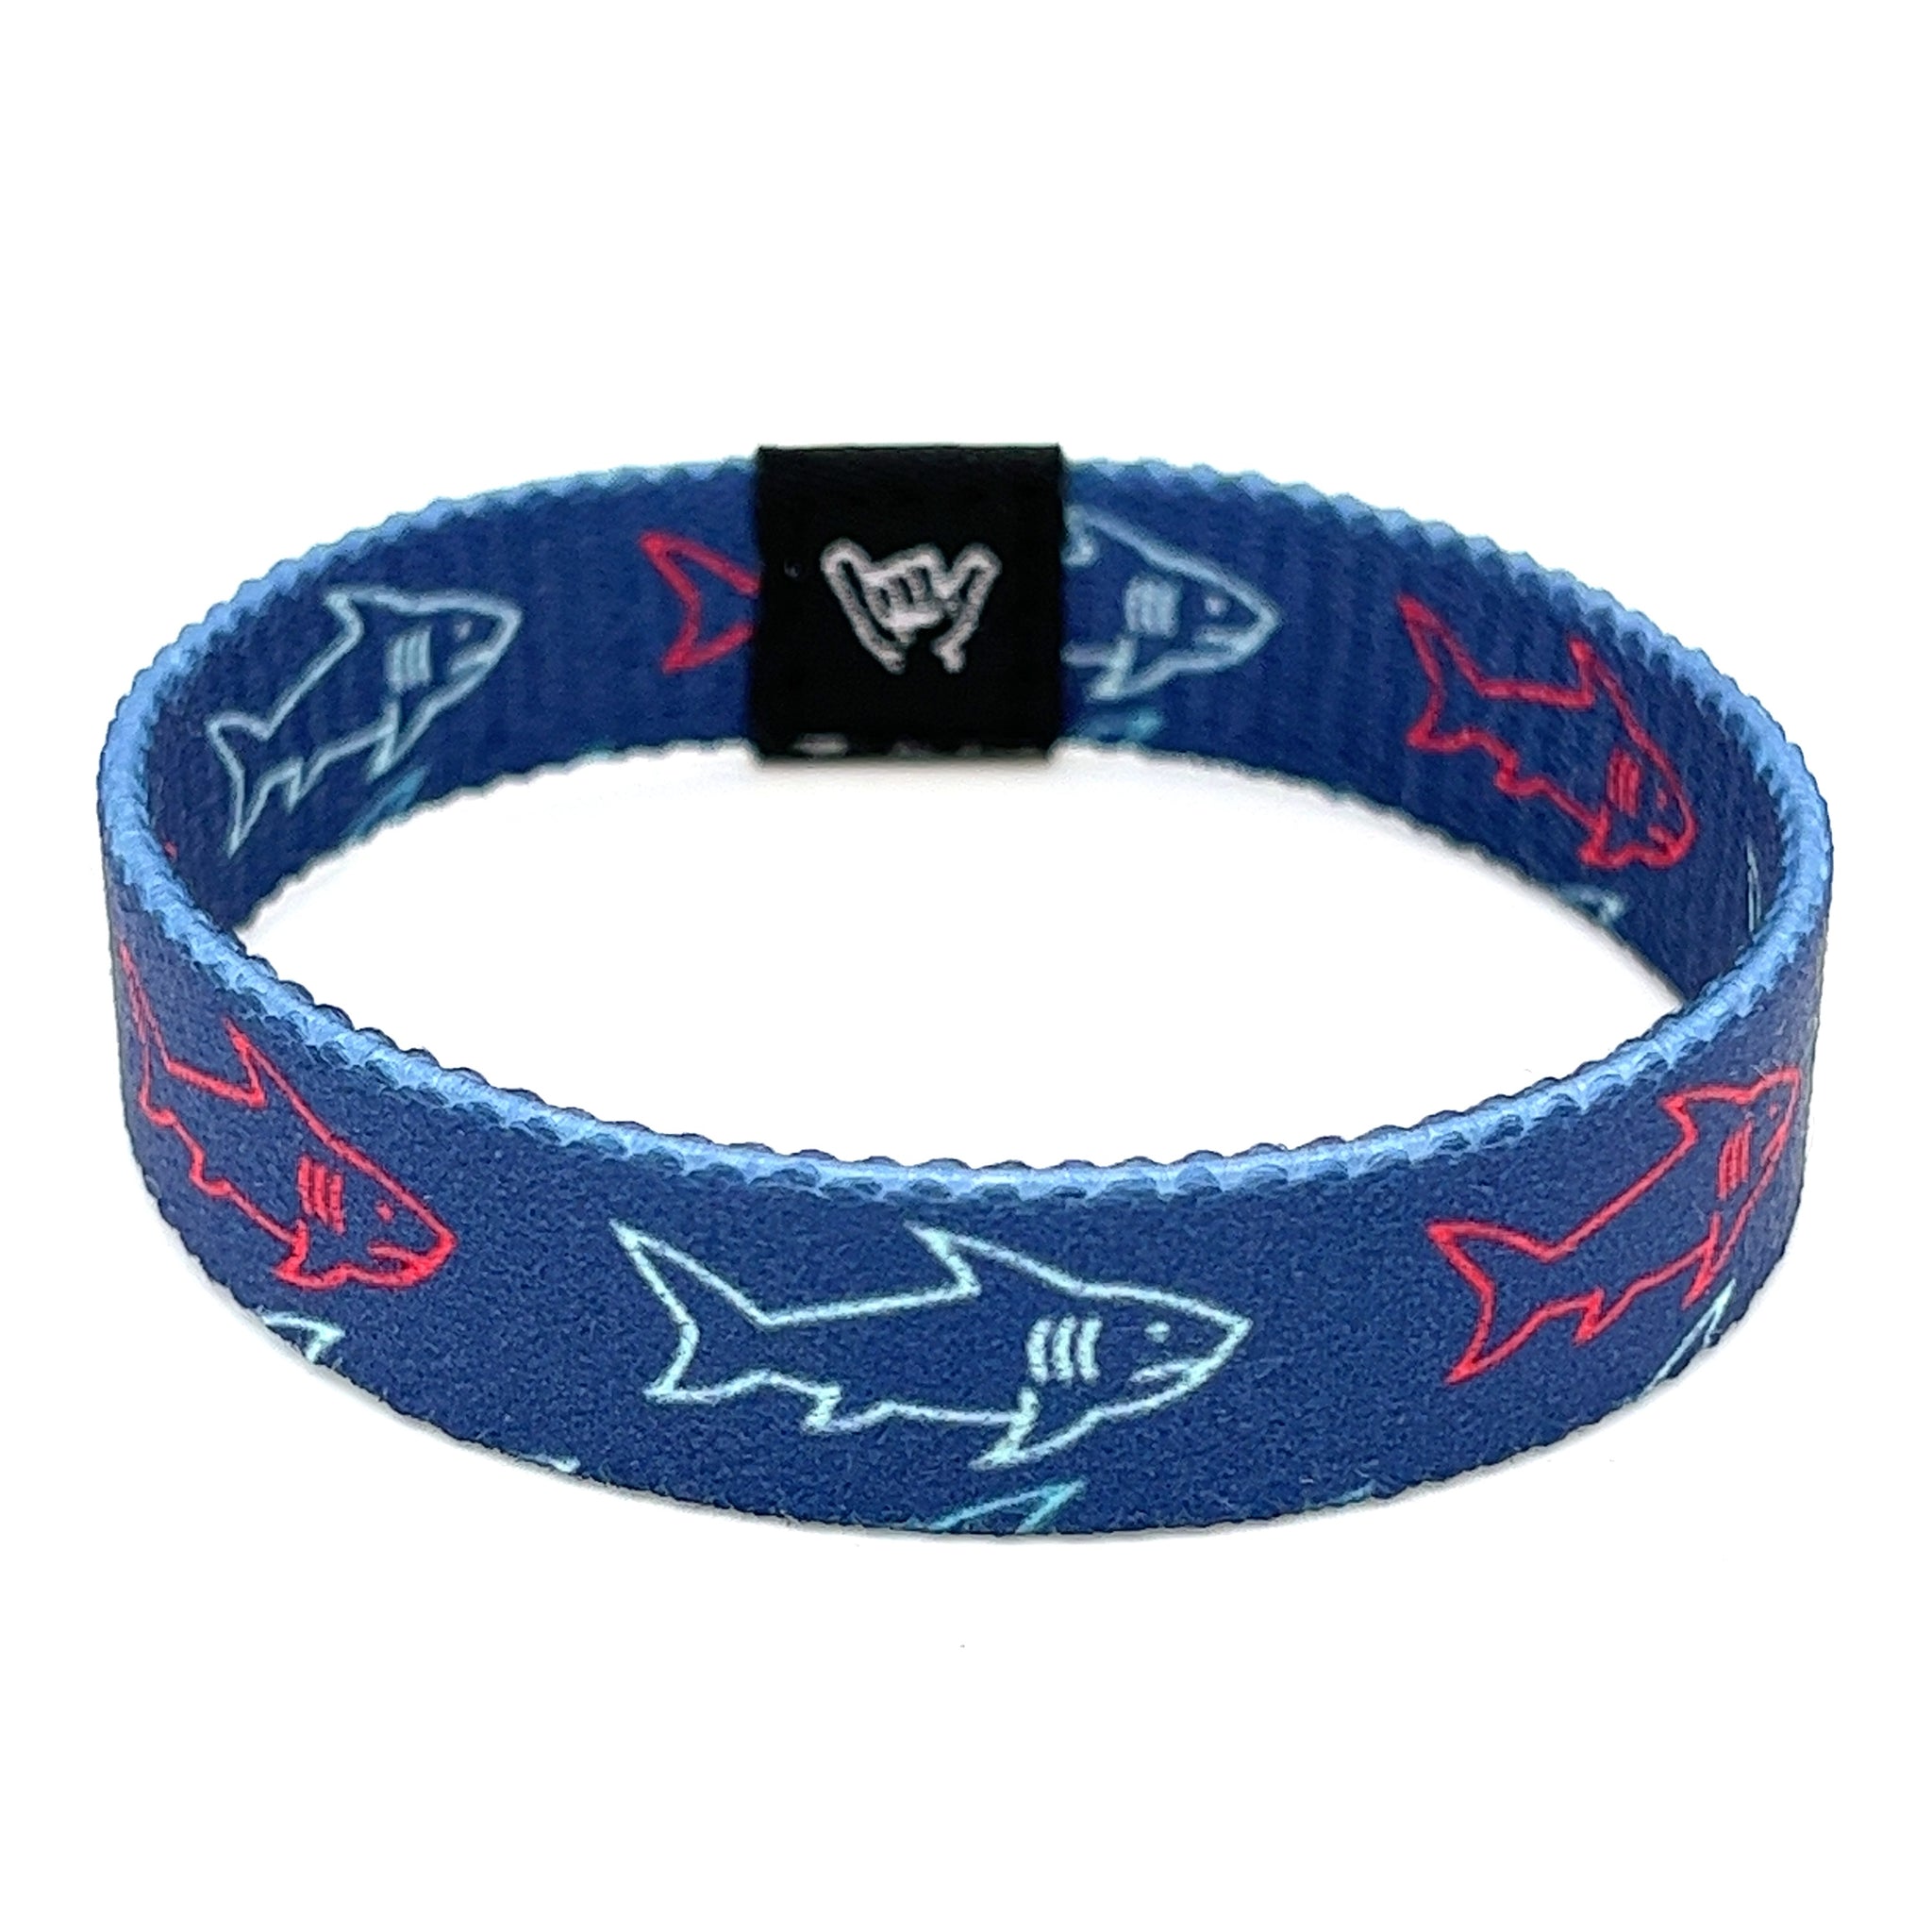 Looming Sharks Wristband Bracelet – Hang Loose Bands